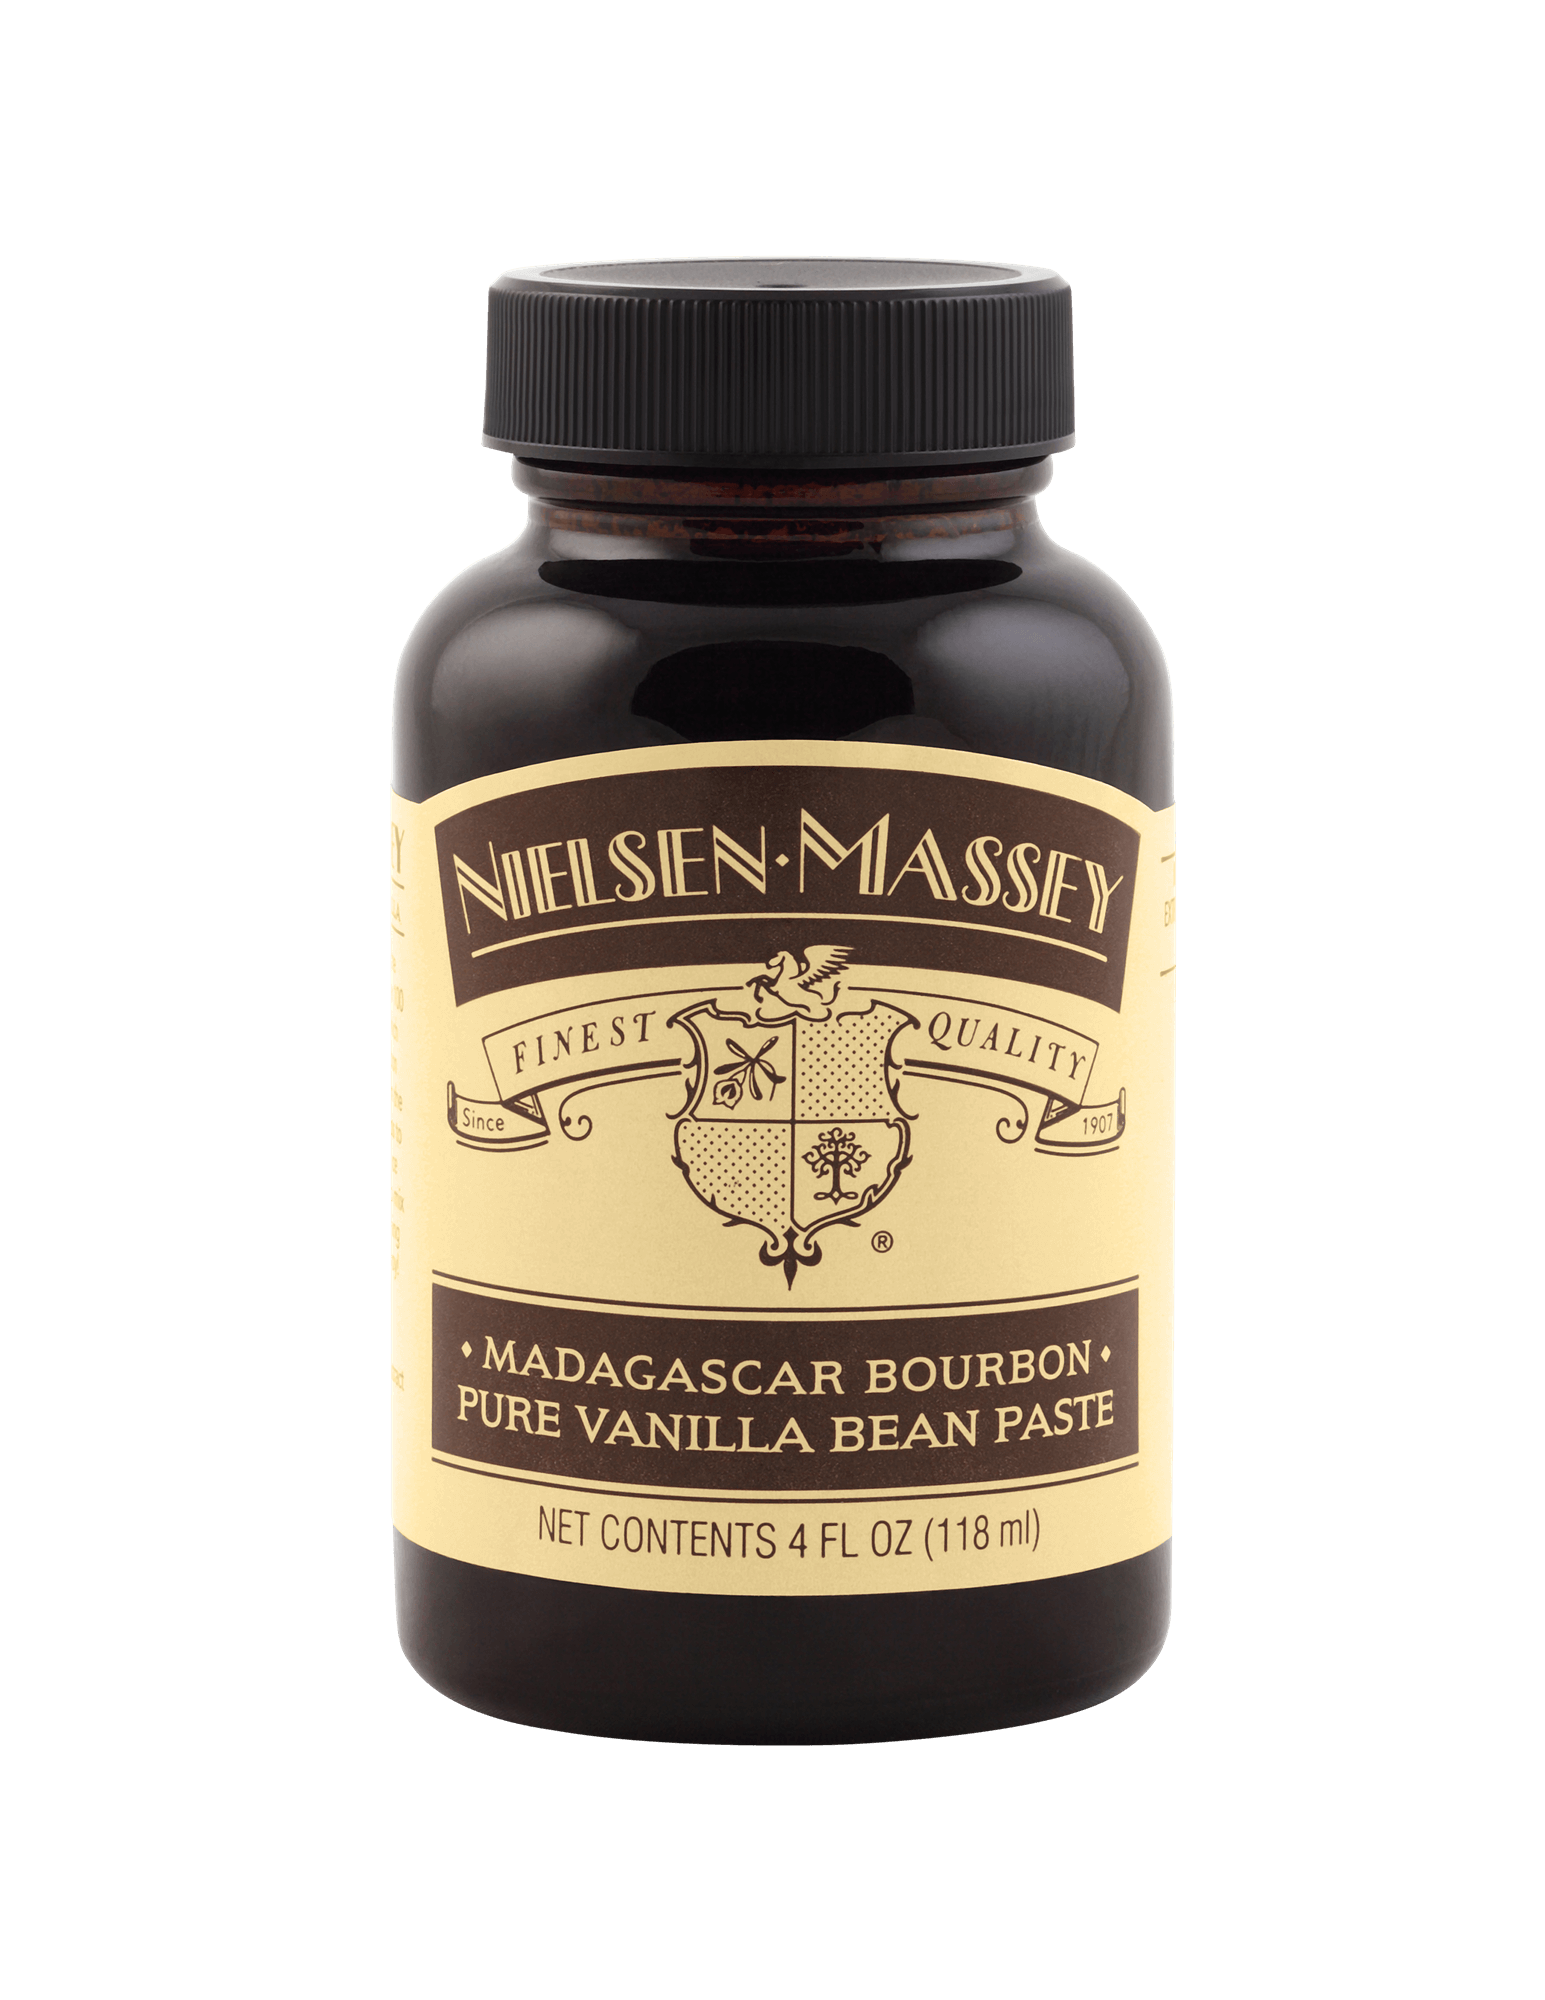 Nielsen-Massey Madagascar Bourbon pure vanilla bean paste